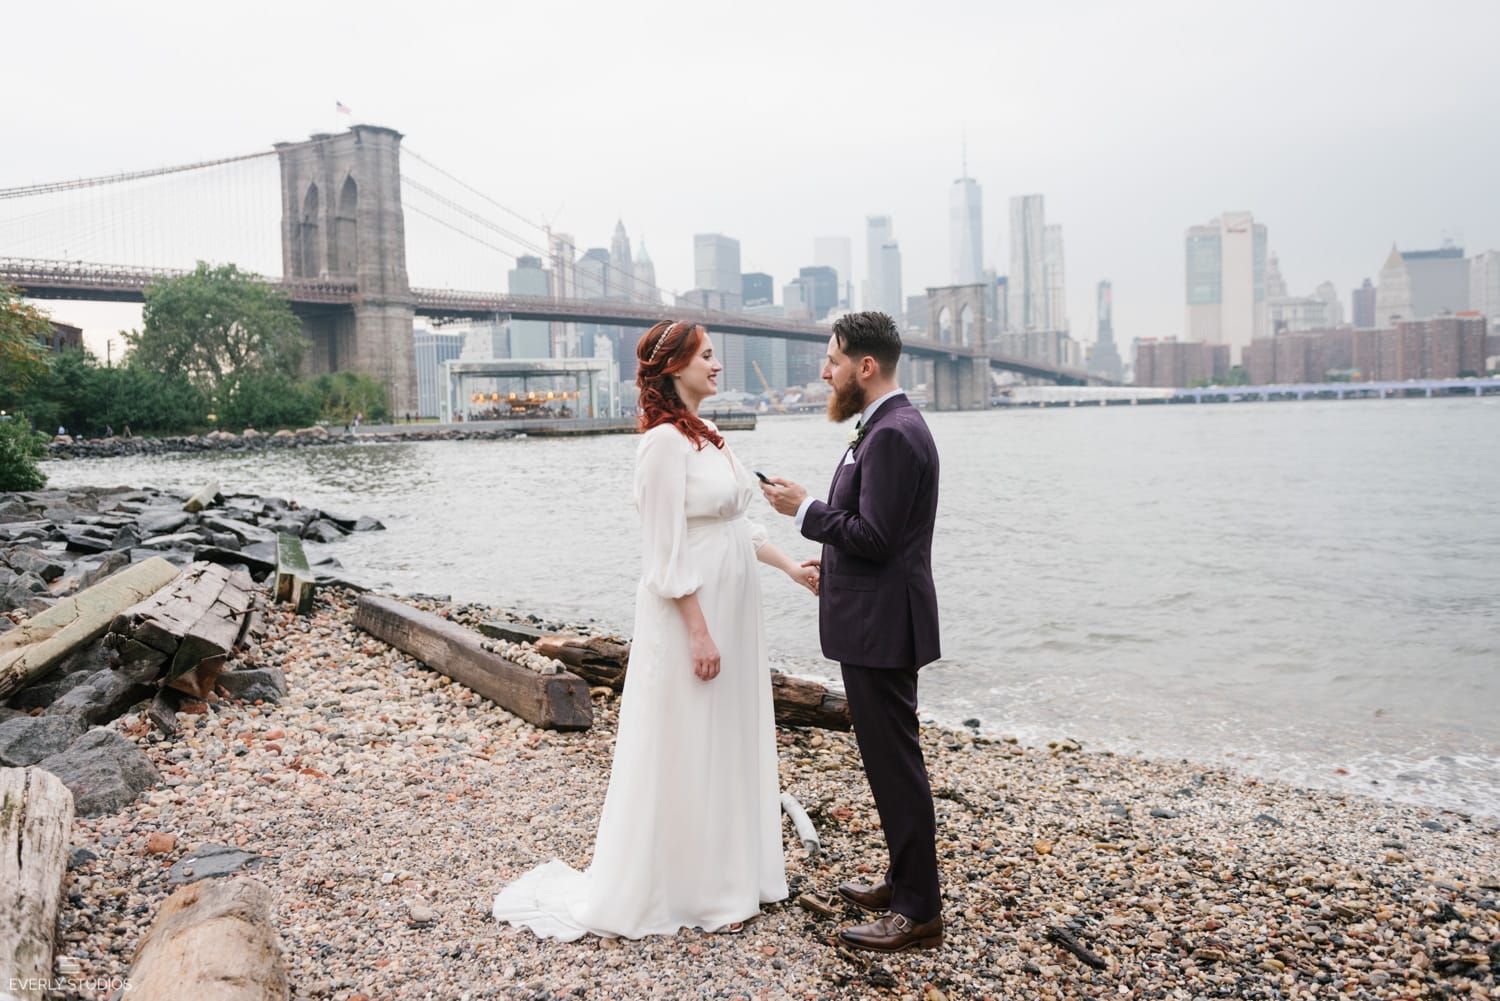 Brooklyn Bridge Park elopement, NYC. Photos by NYC elopement photographer Everly Studios, www.everlystudios.com